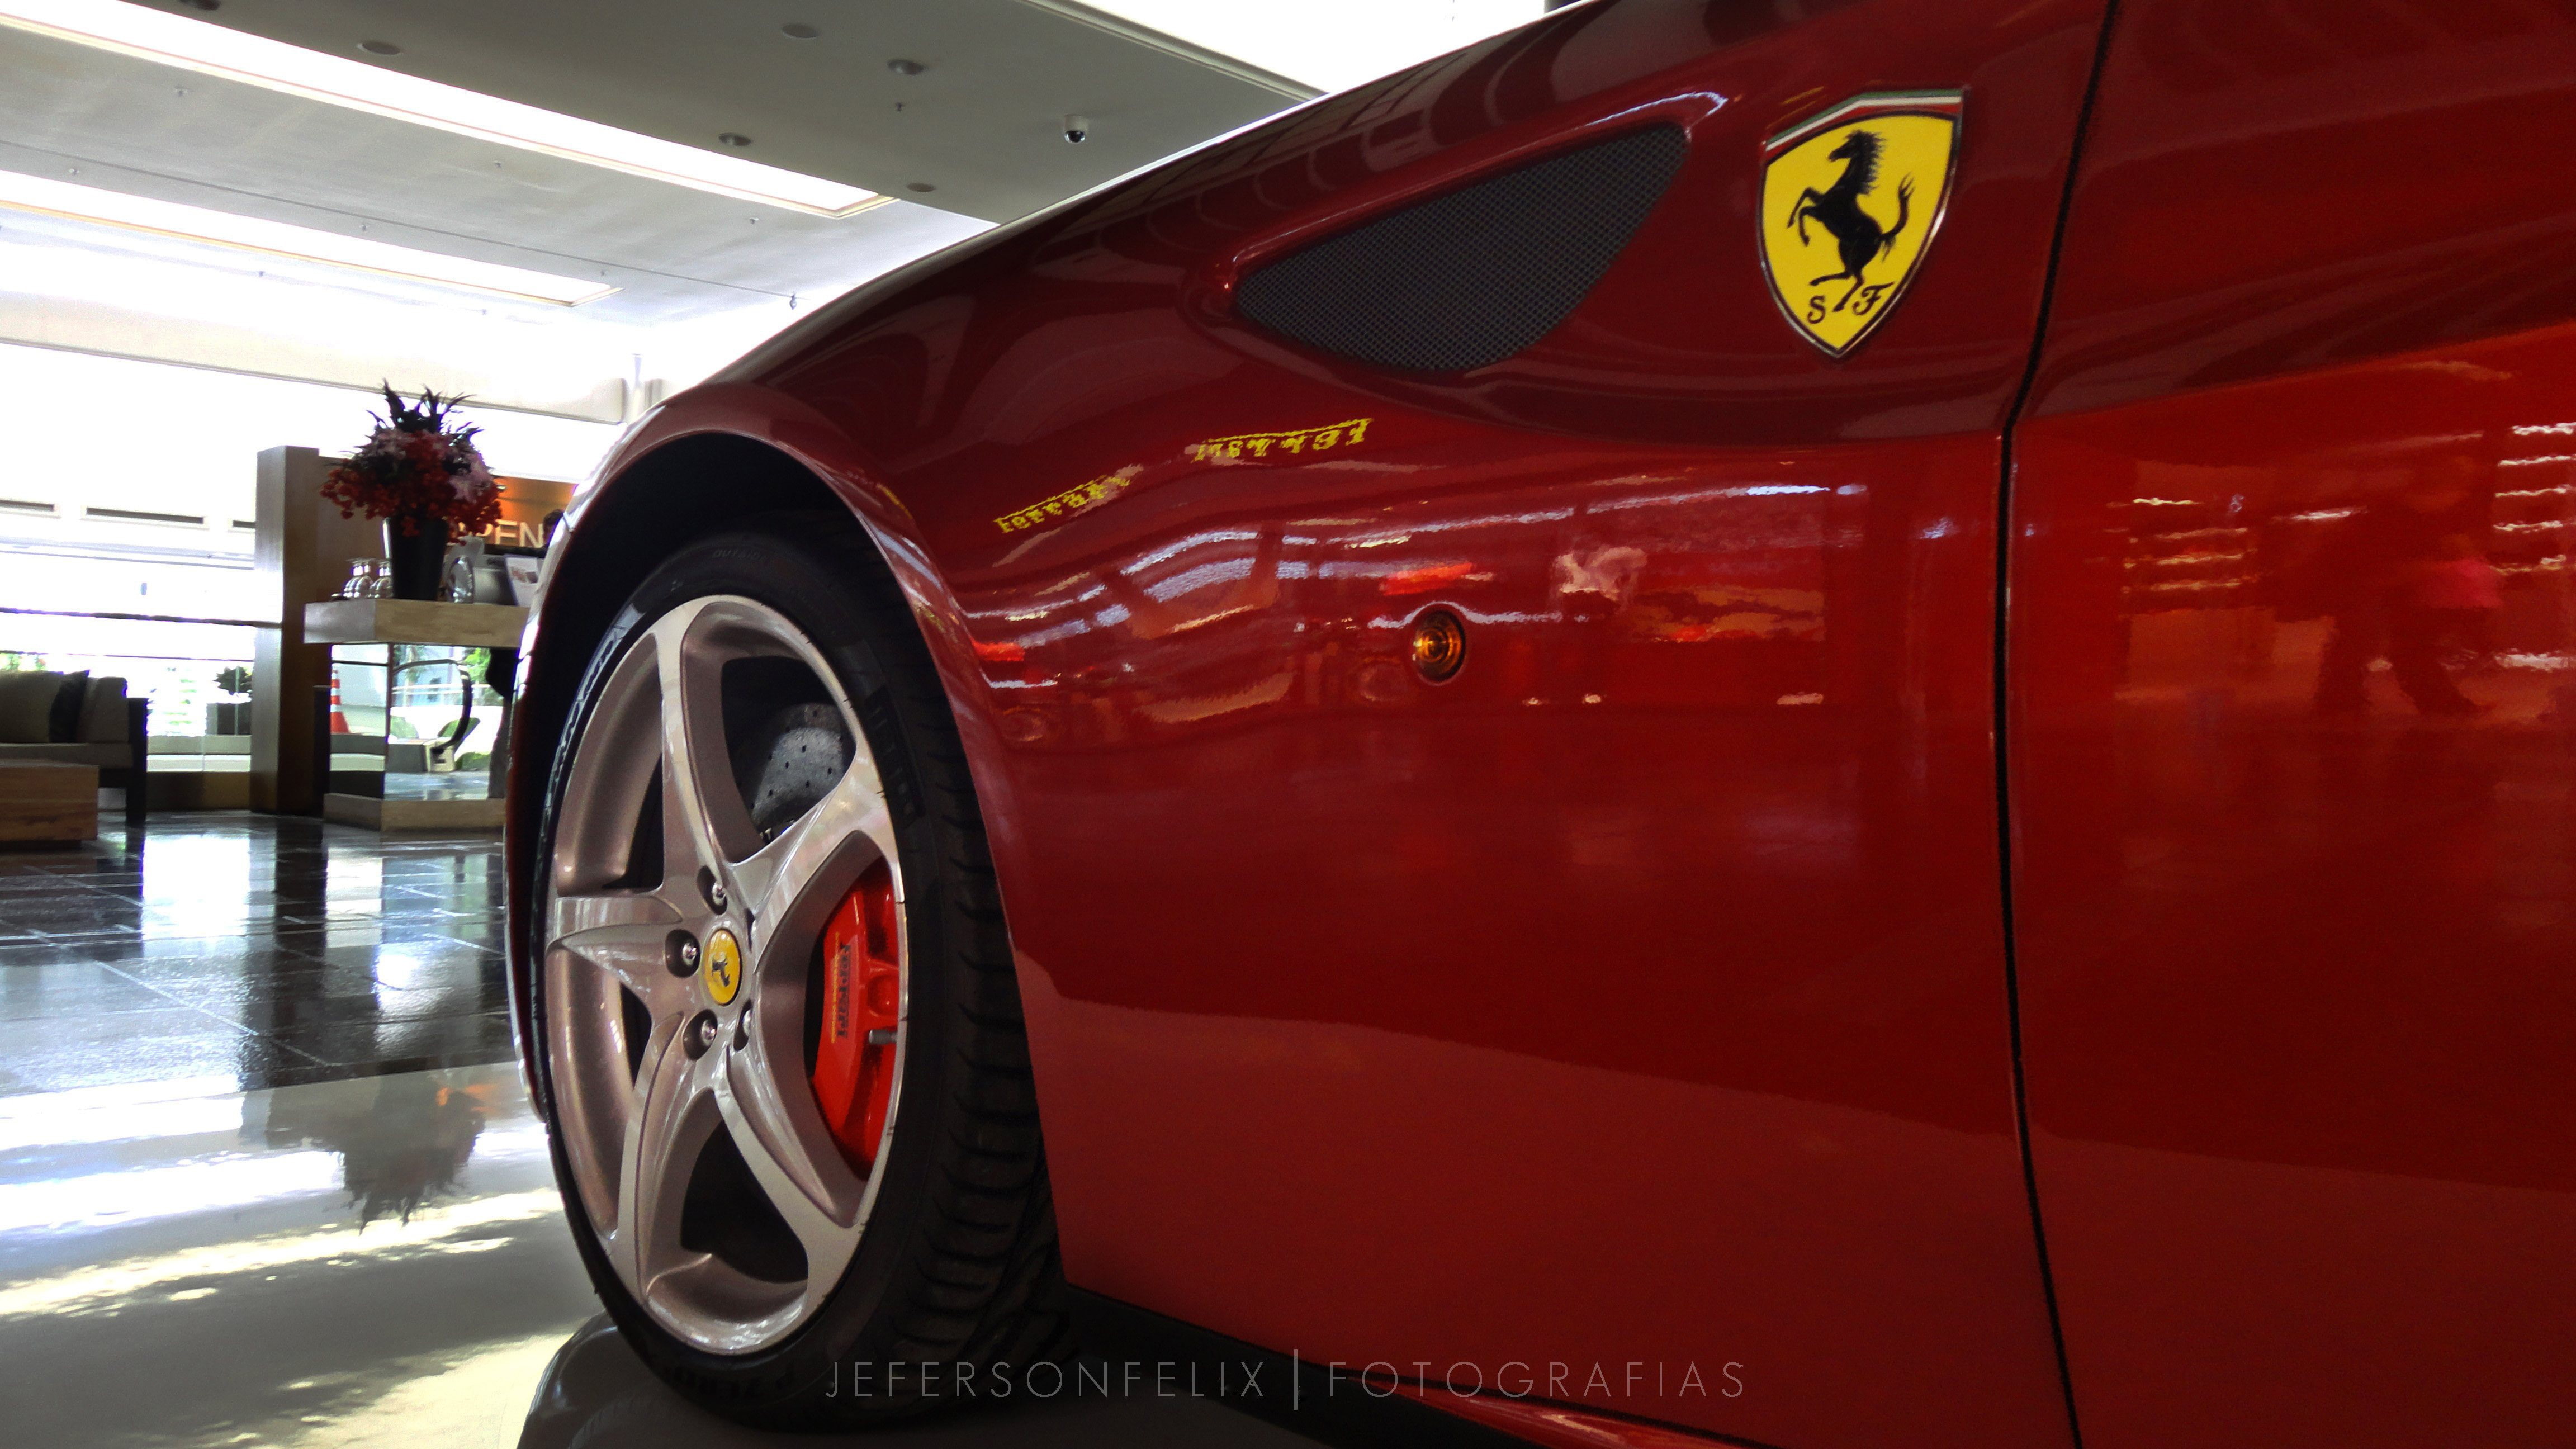 Ferrari FF, car, mode of transportation, land vehicle, red